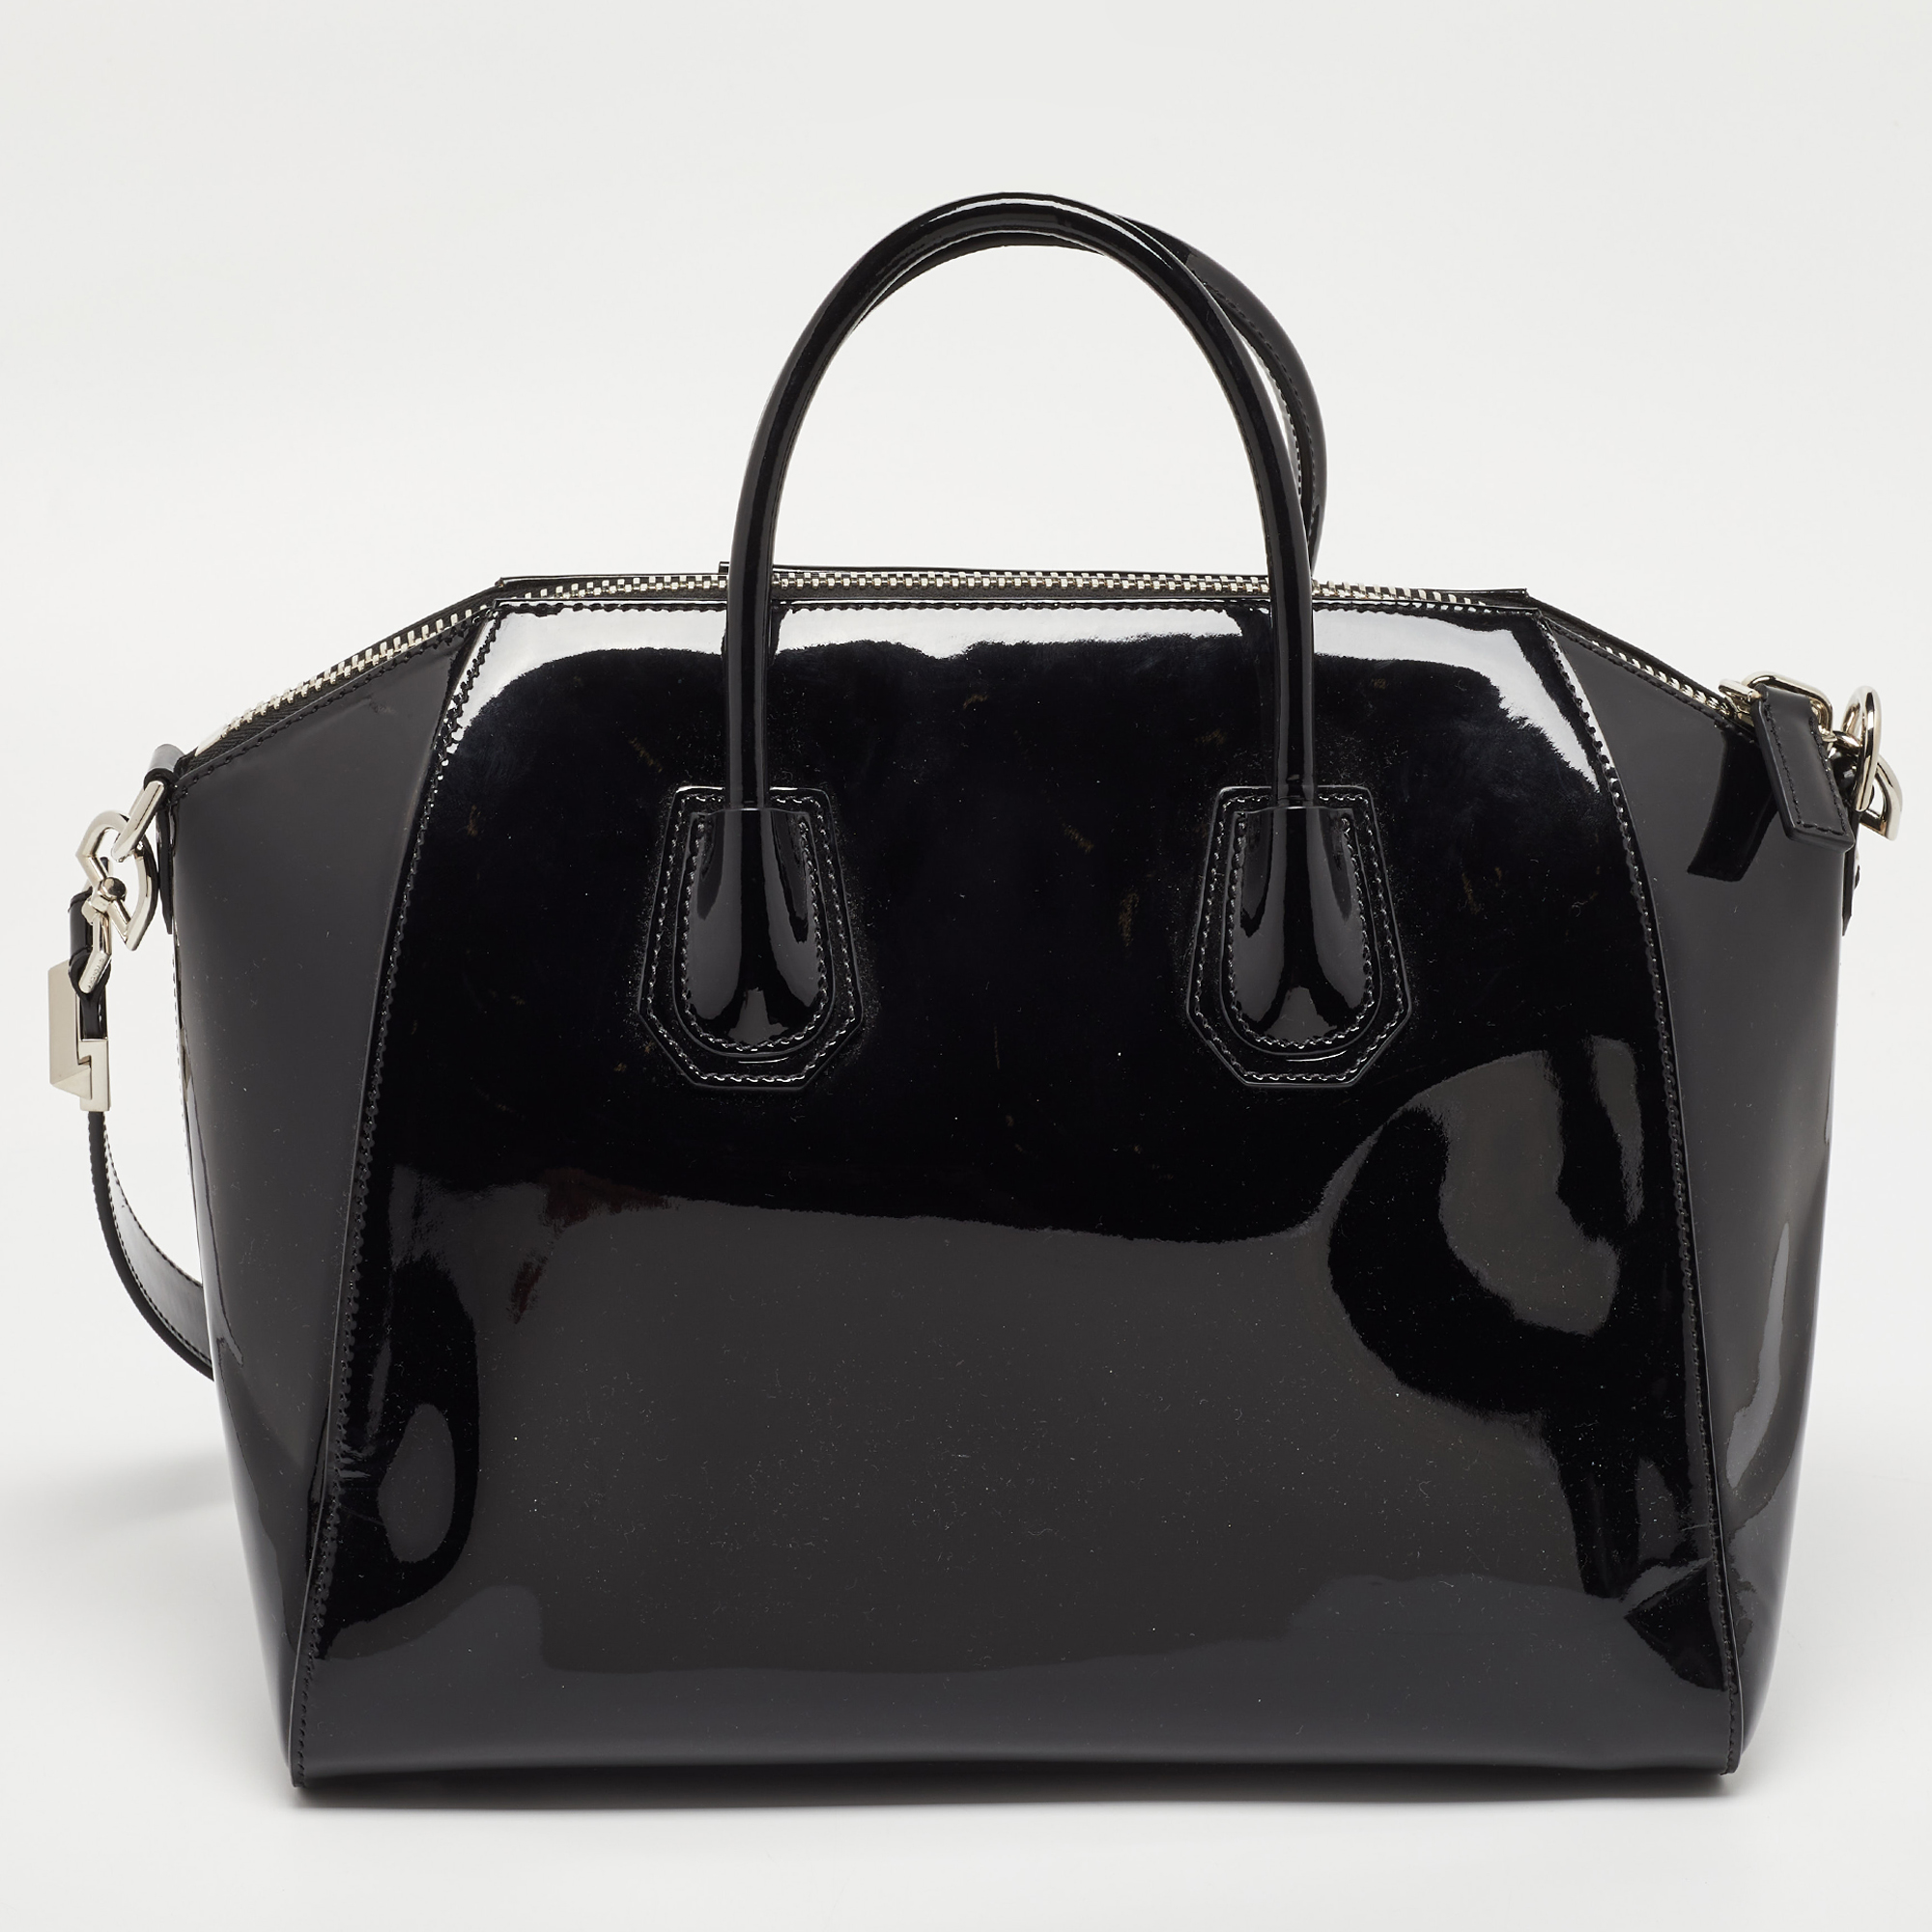 Givenchy Black Patent Leather Medium Antigona Satchel